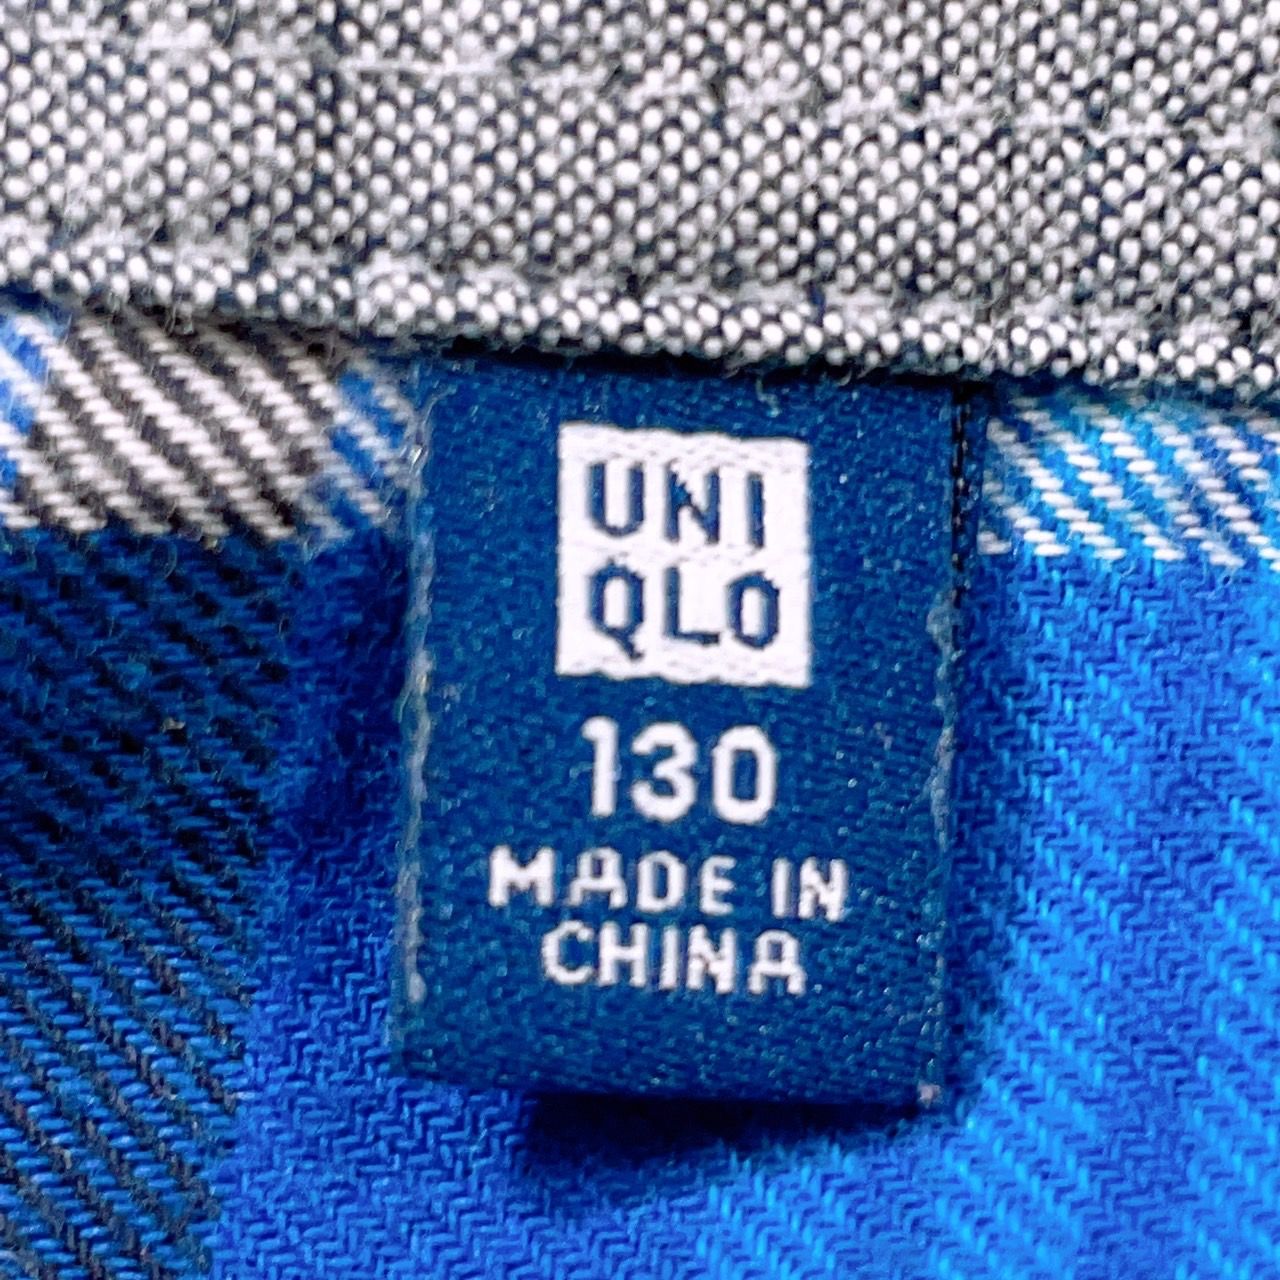 27601】 UNIQLO ユニクロ 長袖シャツ サイズ130 ブルー フランネルシャツ カジュアルシャツ チェック柄 前ボタン お洒落 キッズ  メルカリShops